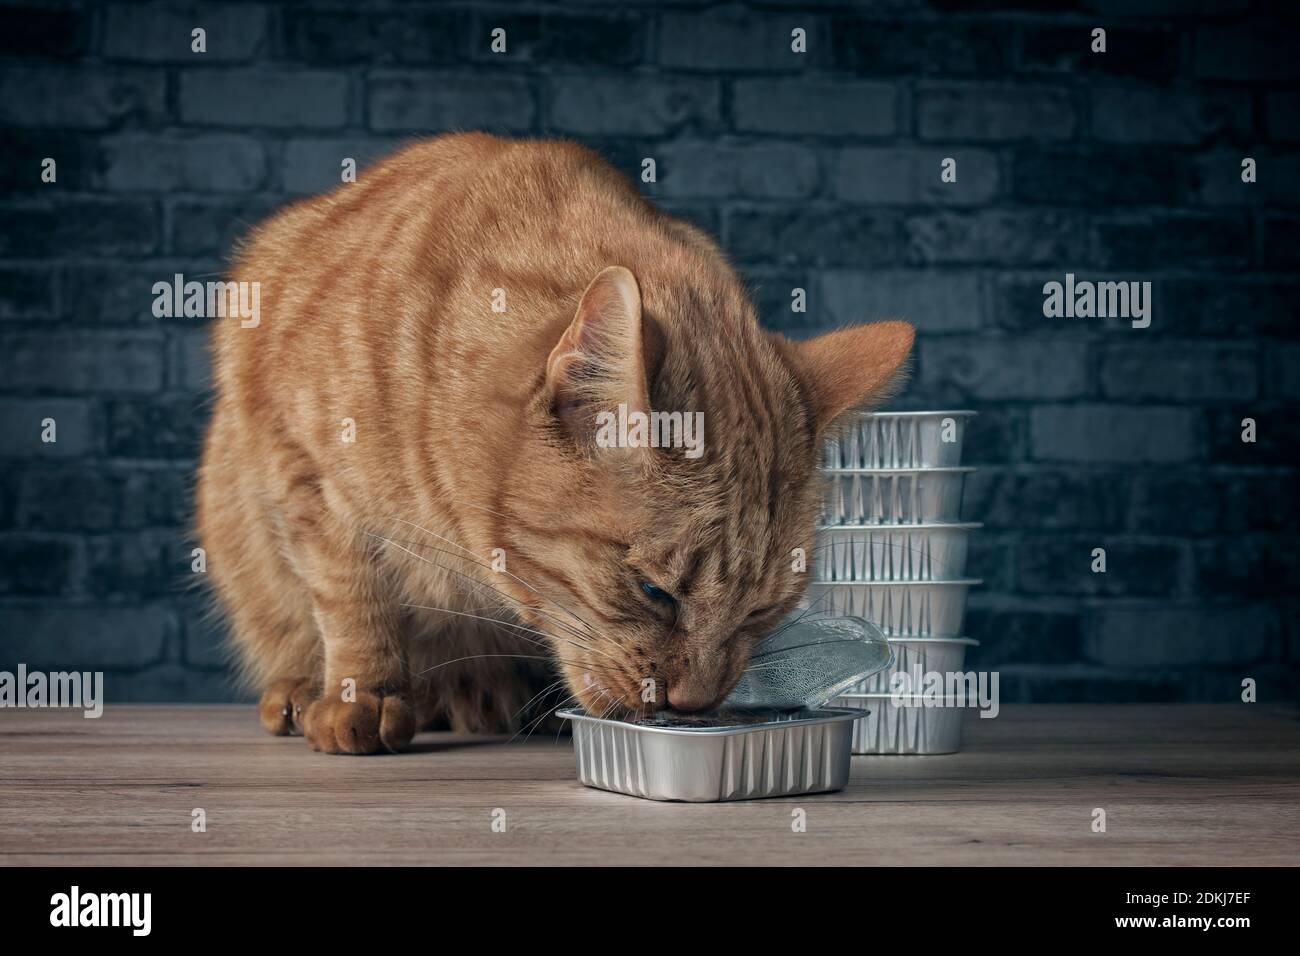 Latas de comida para gatos fotografías e imágenes de alta resolución - Alamy